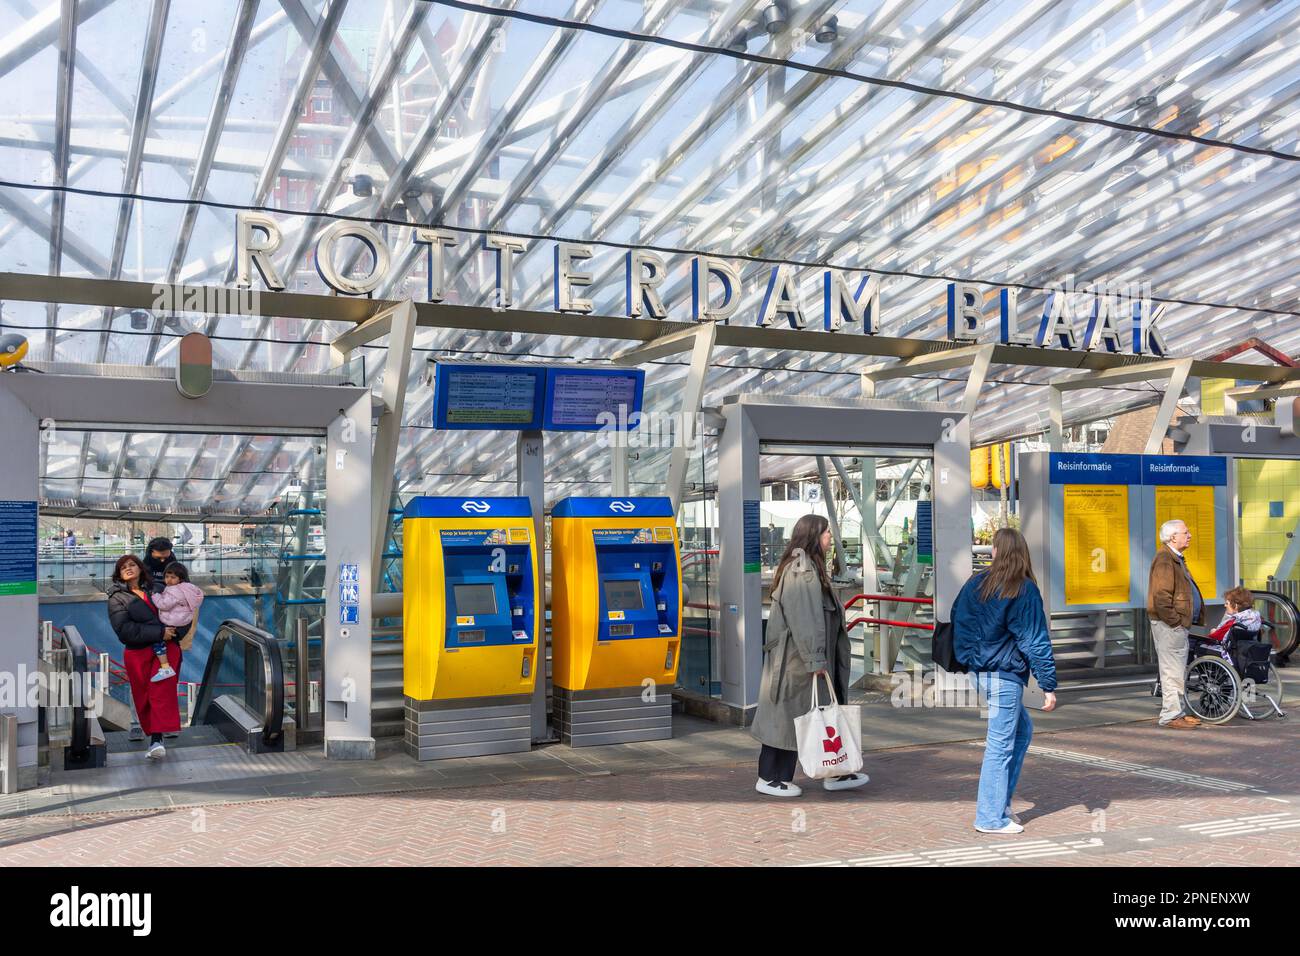 Entrance to Rotterdam Blaak Metro station, Hoogstraat, Stadsdriehoek, Rotterdam, South Holland Province, Kingdom of the Netherlands Stock Photo